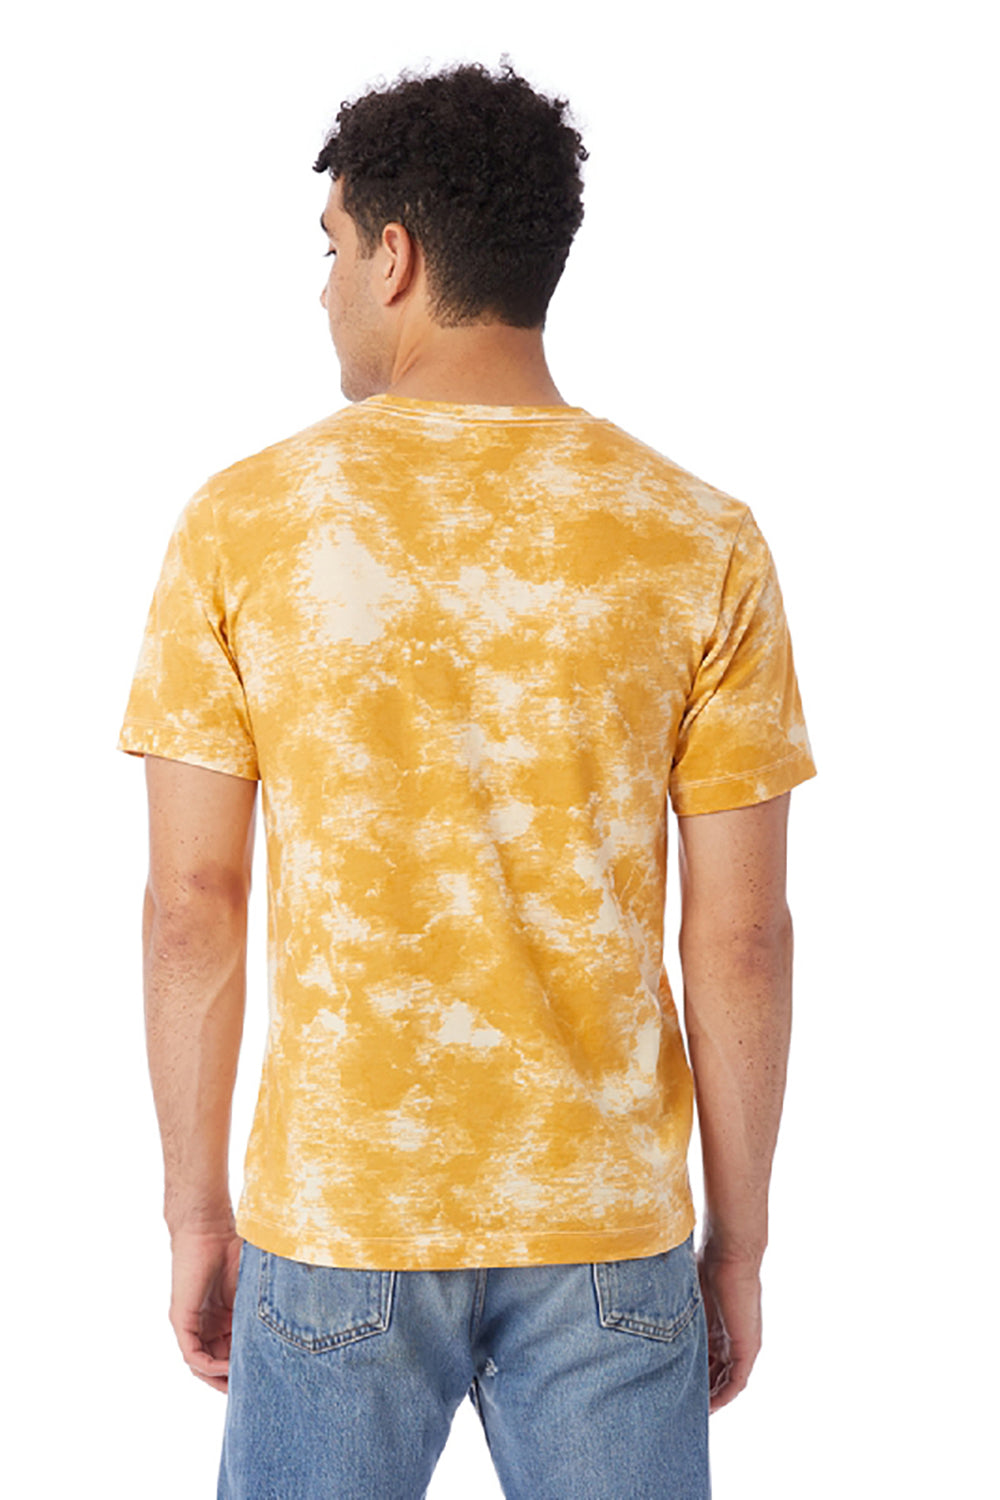 Alternative AA1070/1070 Mens Go To Jersey Short Sleeve Crewneck T-Shirt Gold Tie Dye Model Back